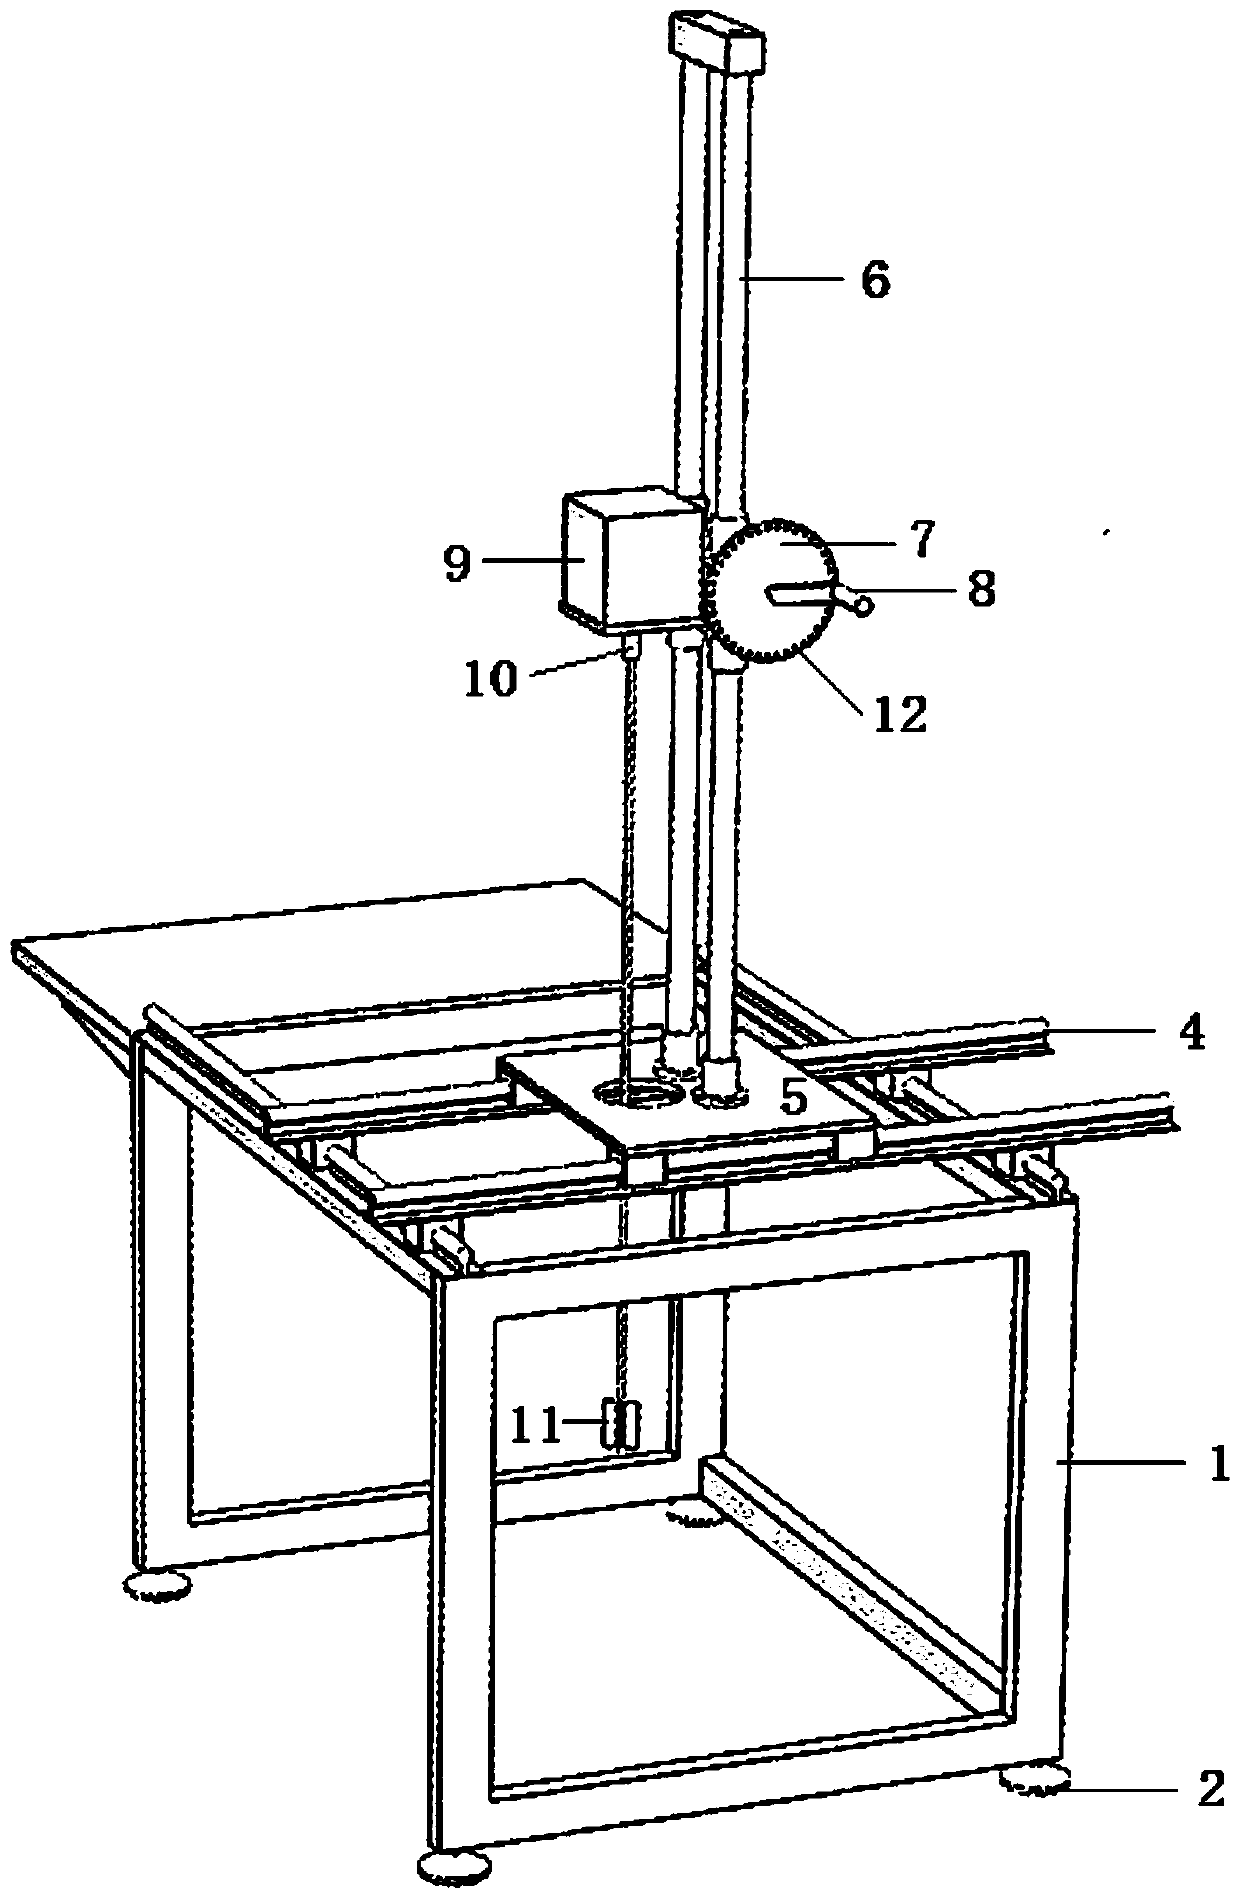 A box-type sampling shear strength test device